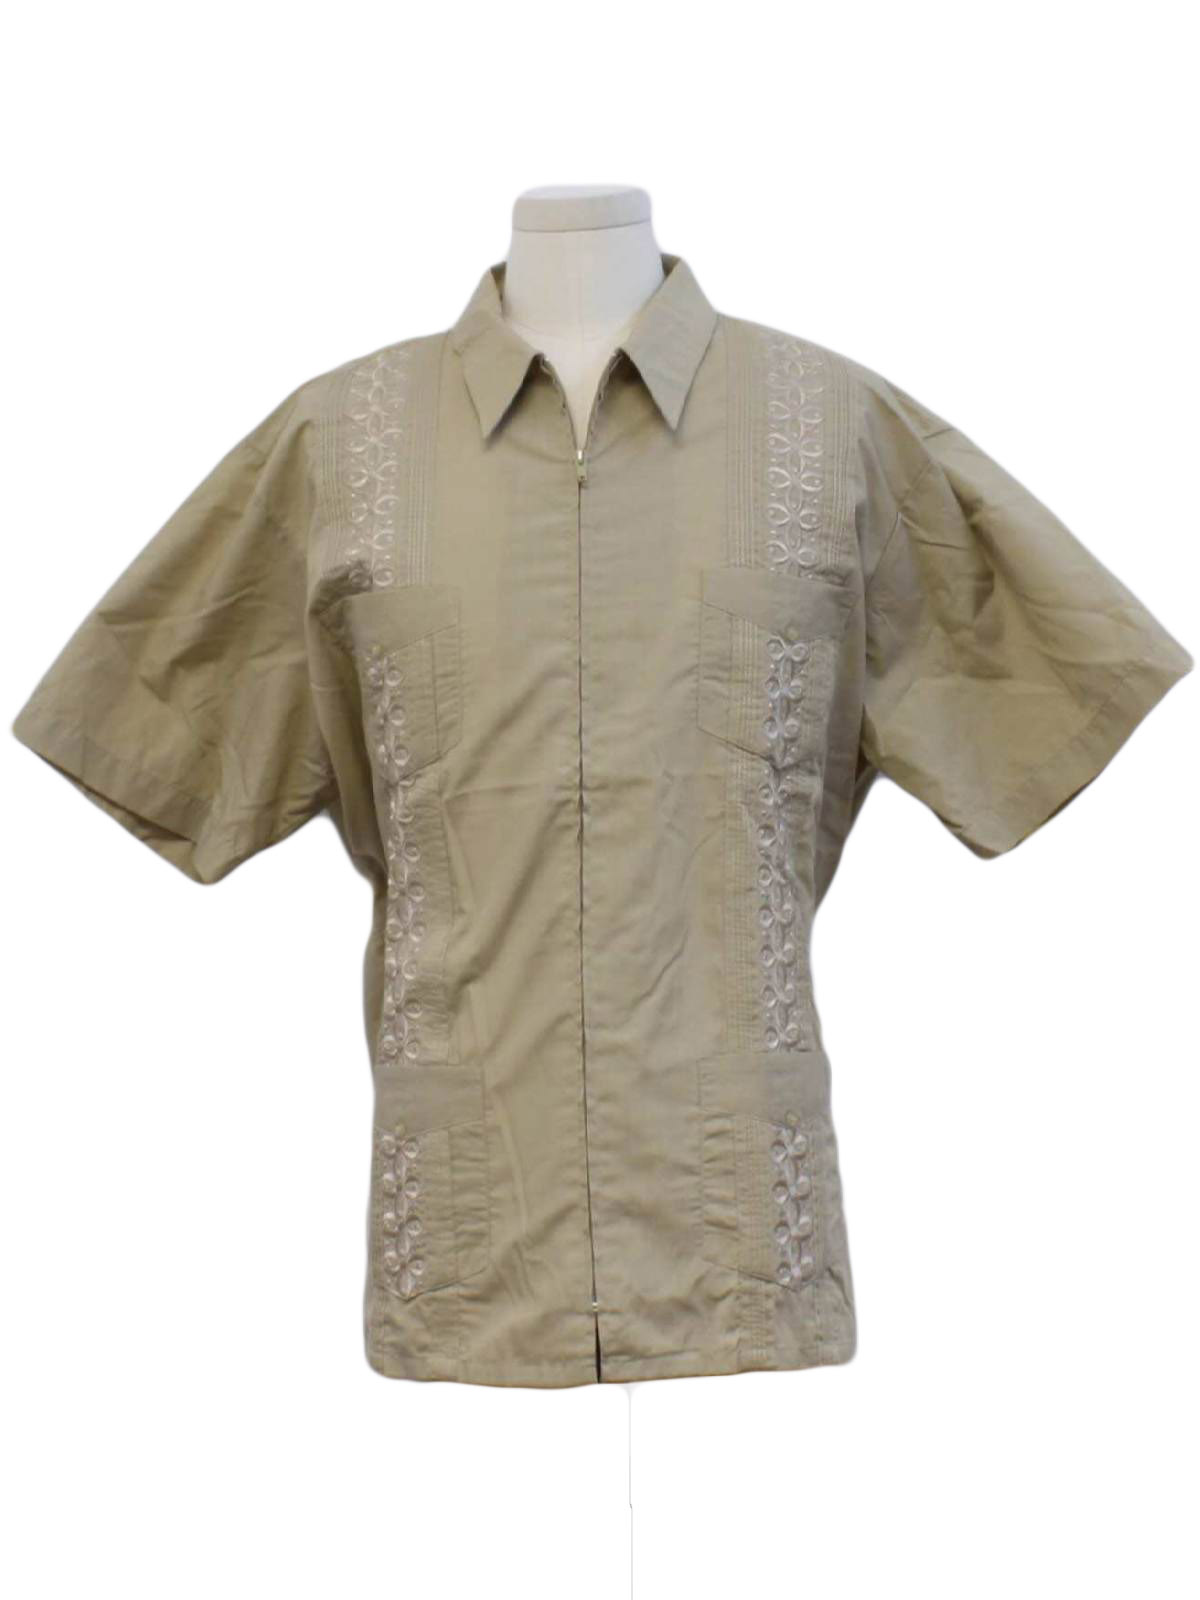 Retro 80s Guayabera Shirt (Haband) : 80s -Haband- Mens tan background ...